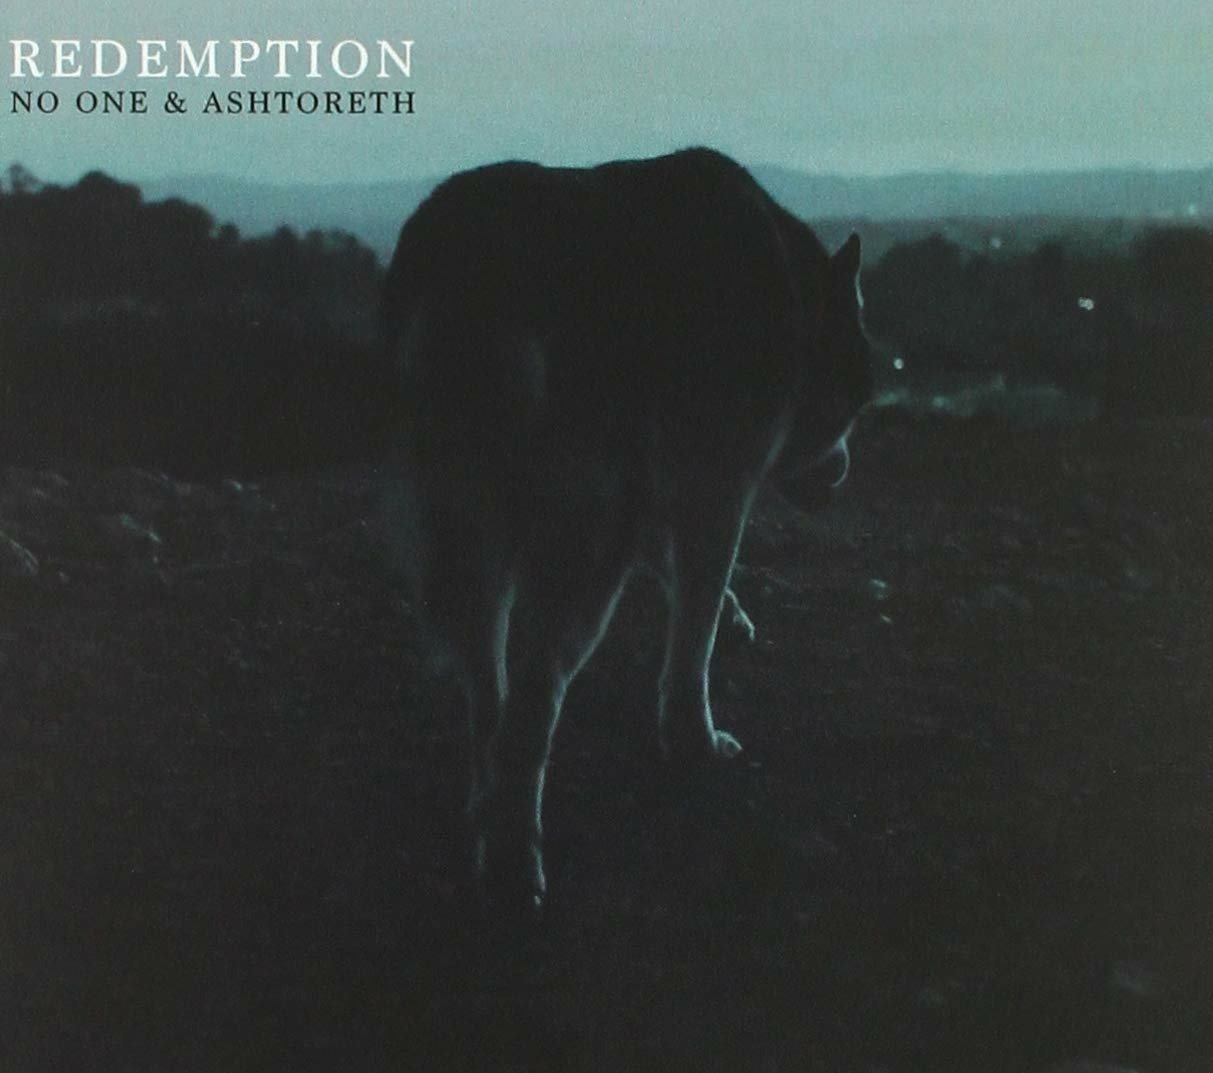 CD Shop - ASHTORETH/NO ONE REDEMPTION